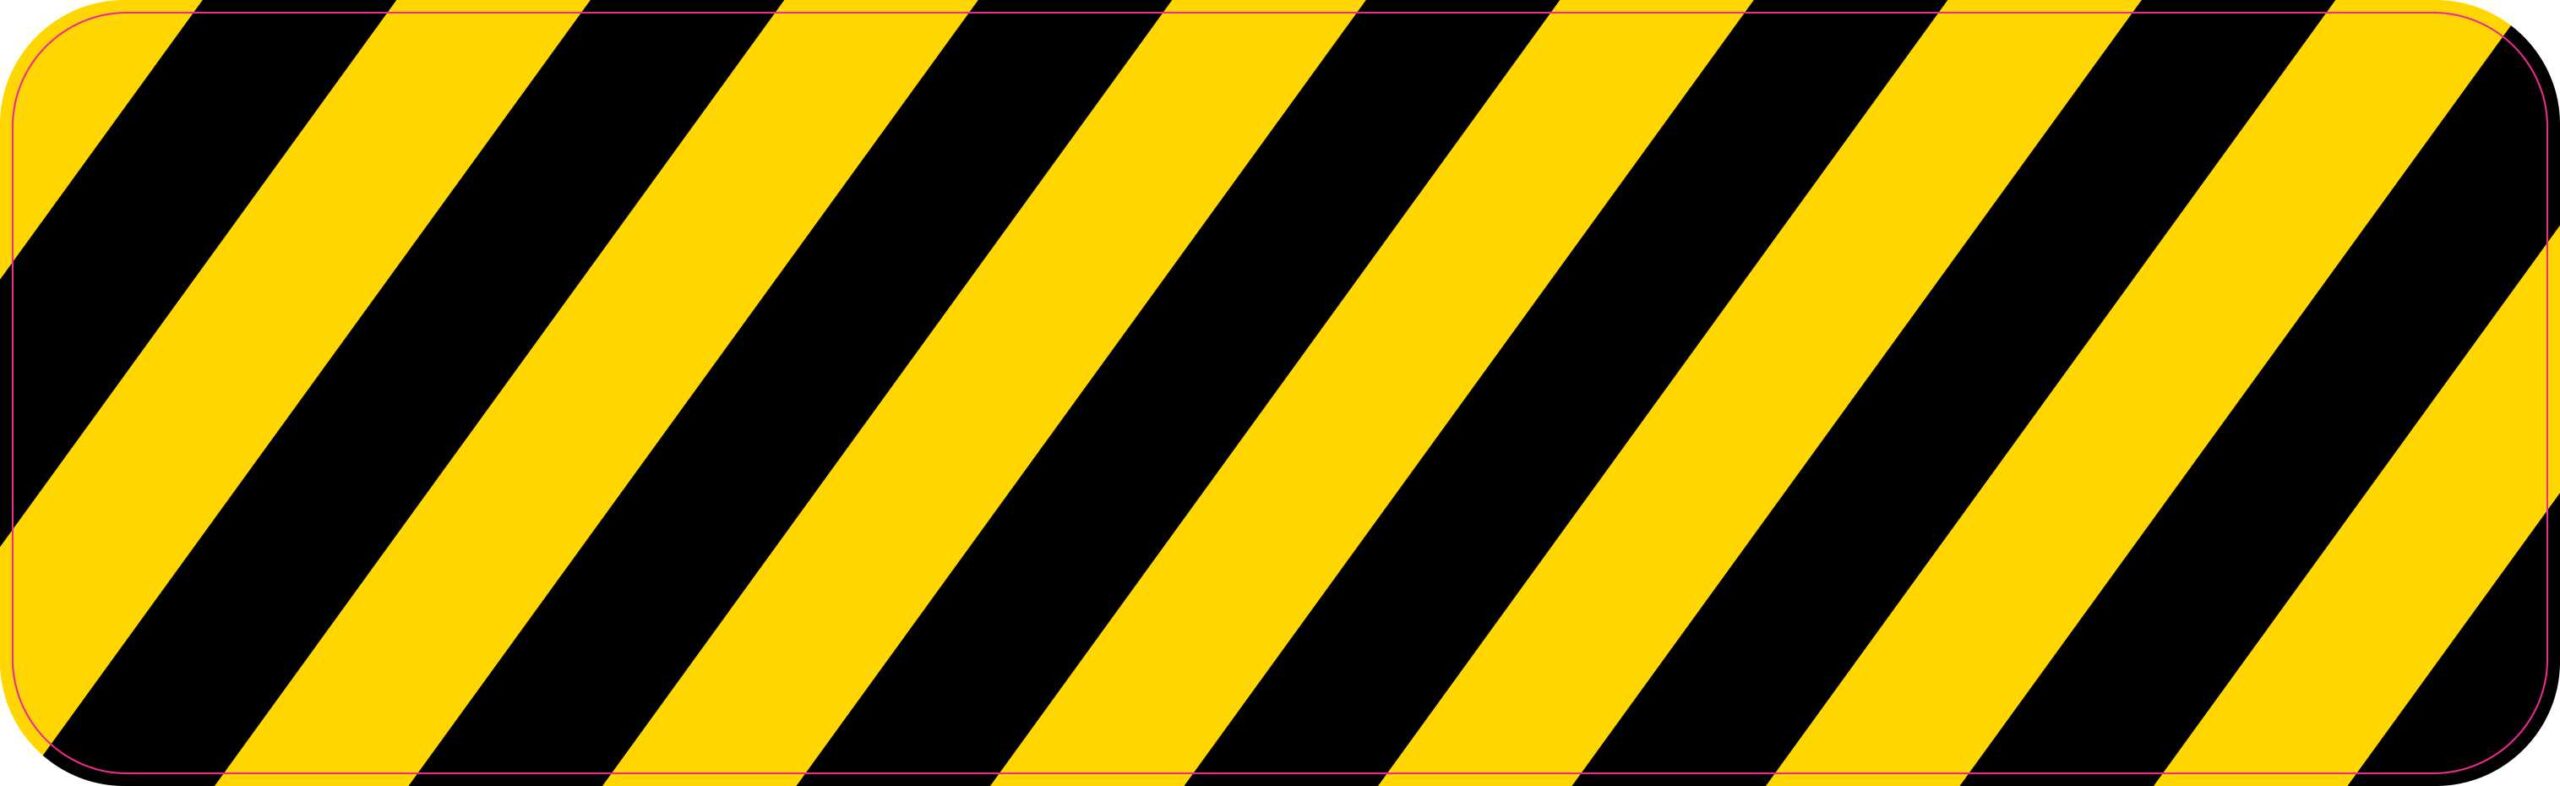 StickerTalk Yellow and Black Caution Stripes Vinyl Sticker, 10.5 Inches x 13.5 Inches